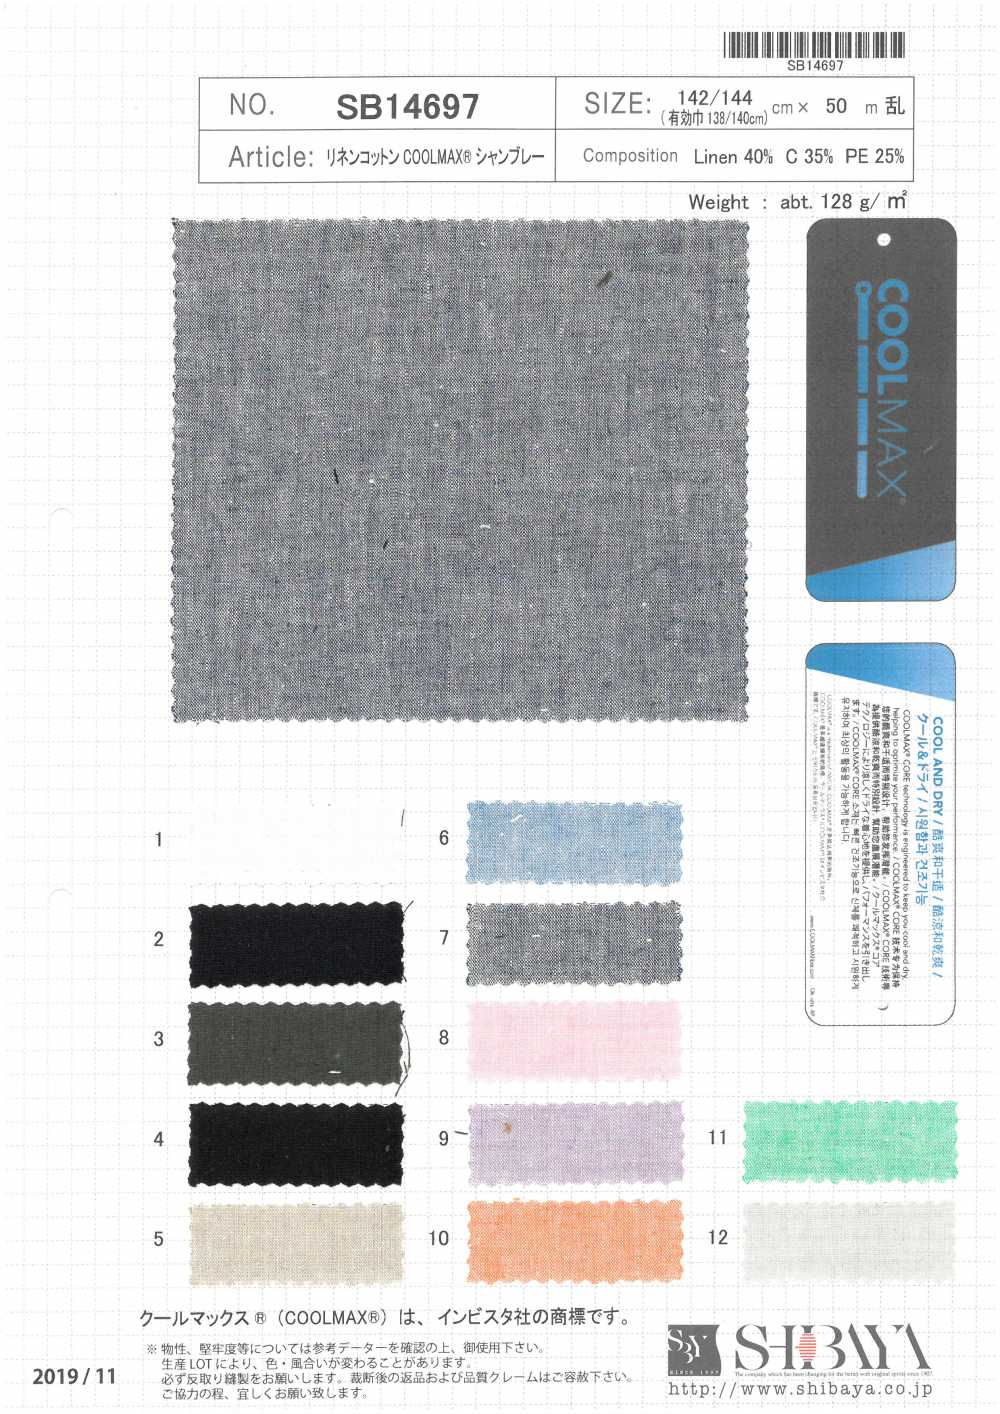 SB14697 Linen / Cotton / COOLMAX® Chambray[Textile / Fabric] SHIBAYA